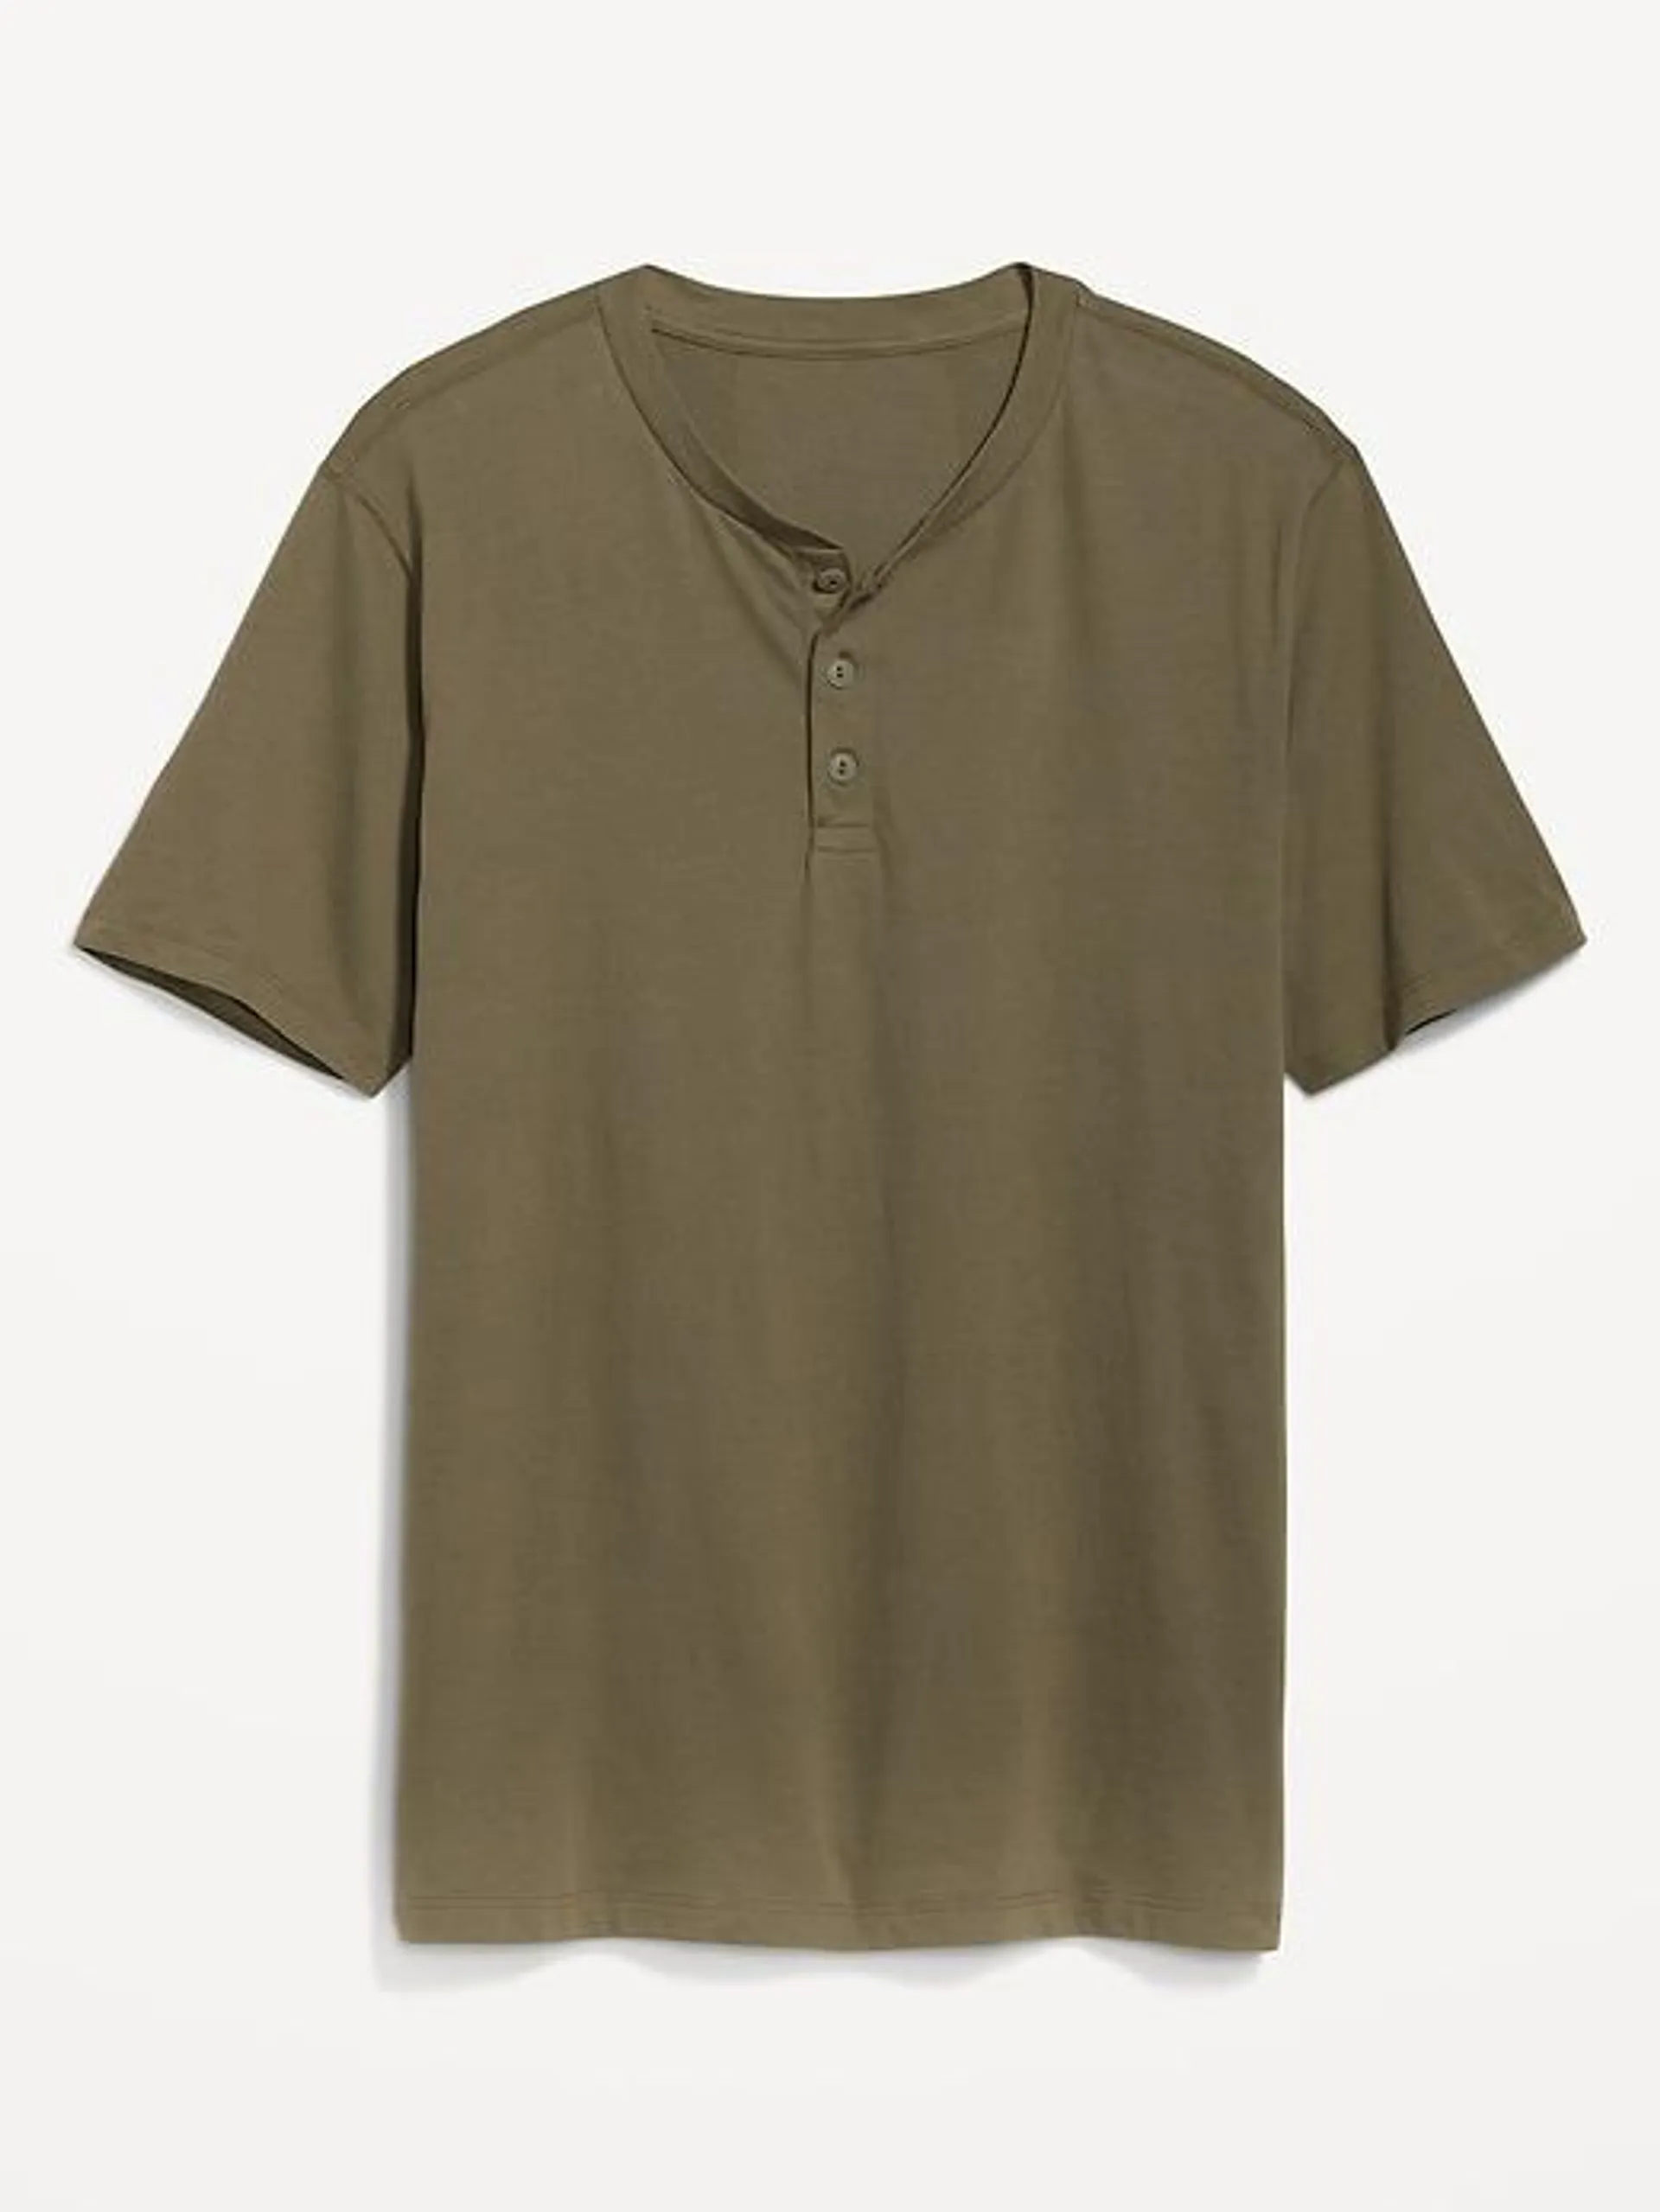 Soft-Washed Short-Sleeve Henley T-Shirt for Men